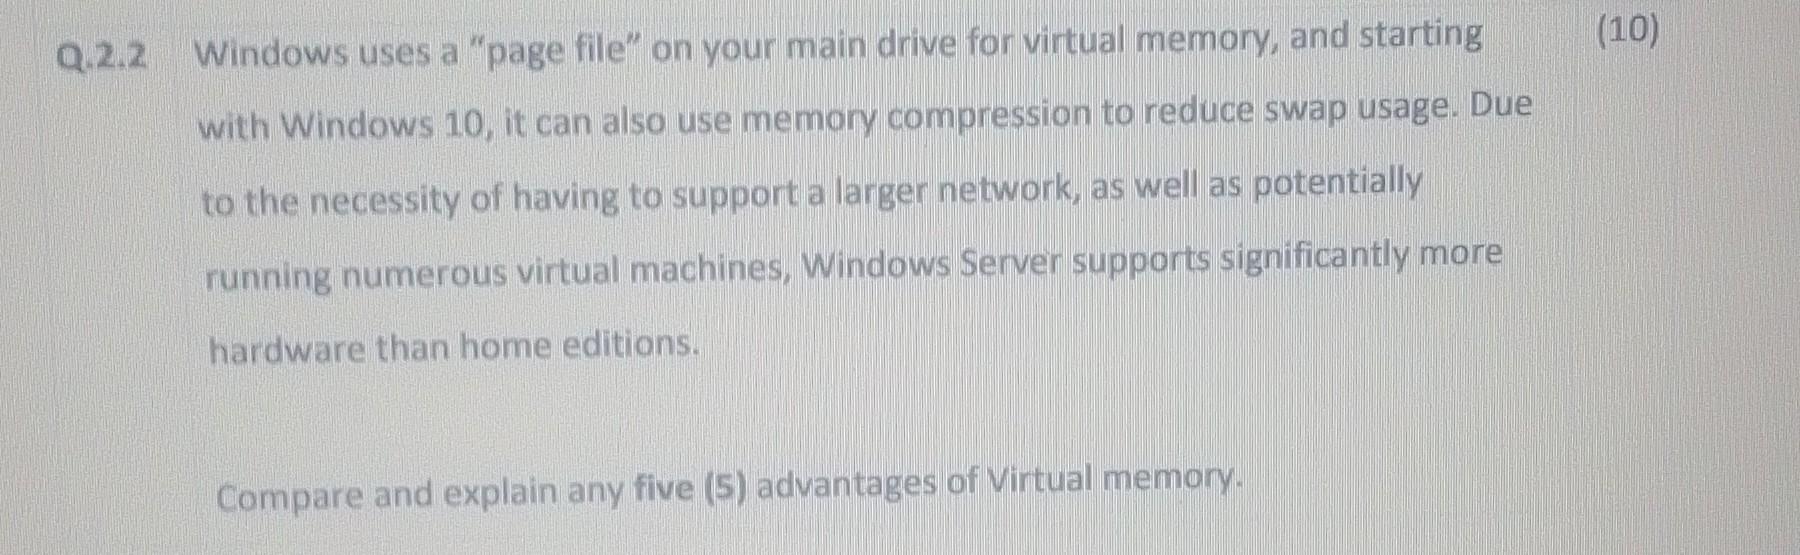 Q.2.2 Windows uses a 